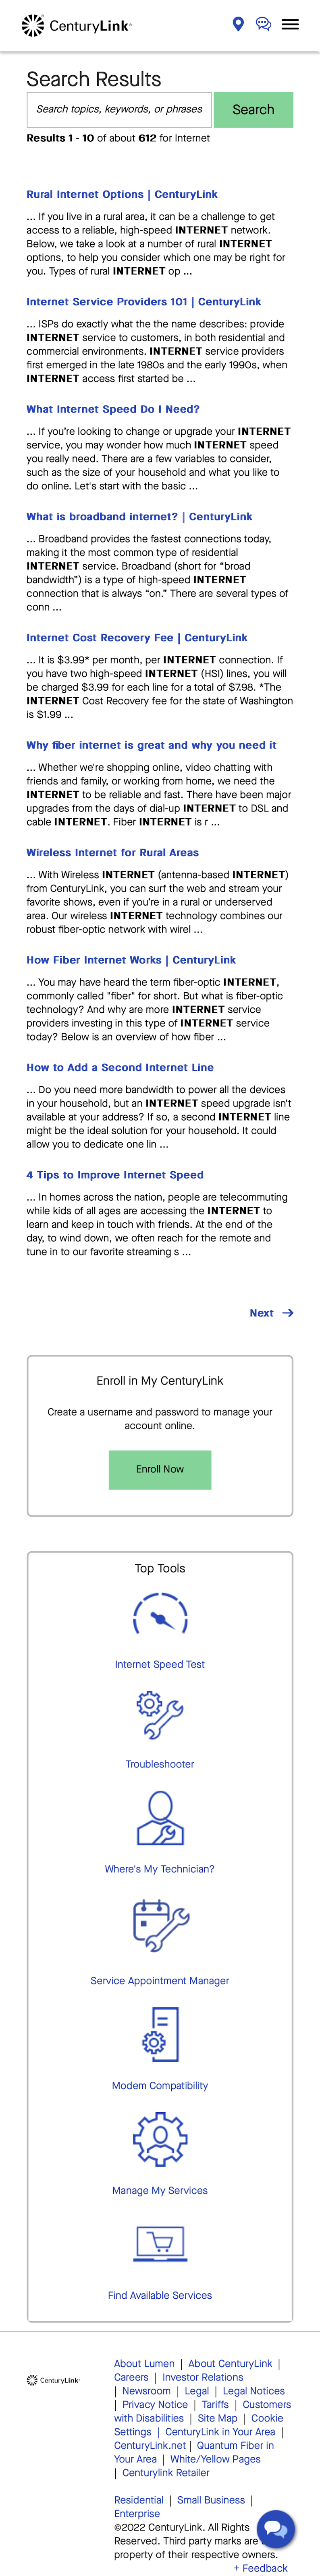 Mobile screenshot of CenturyLink